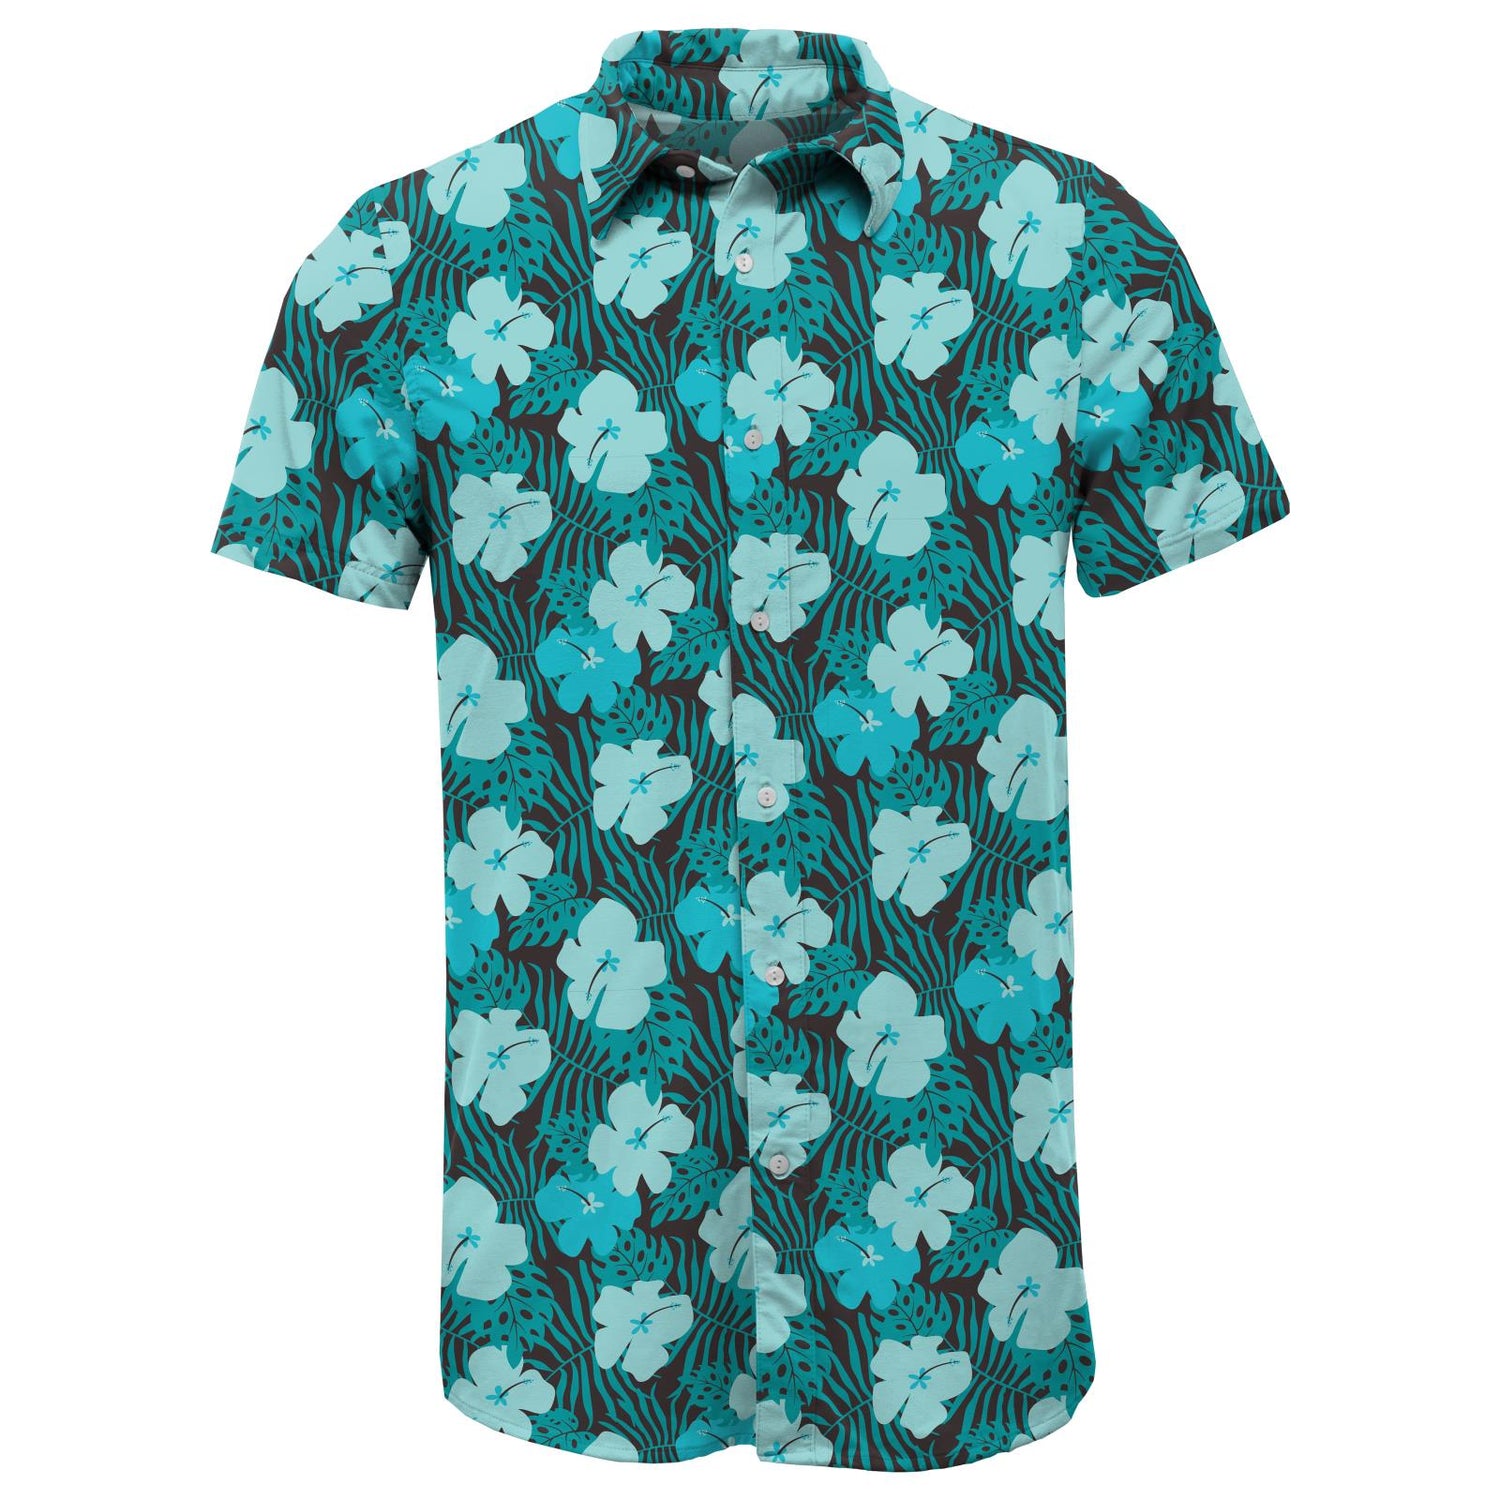 Men's Print Short Sleeve Button Down Shirt in Midnight Hawaiian Print